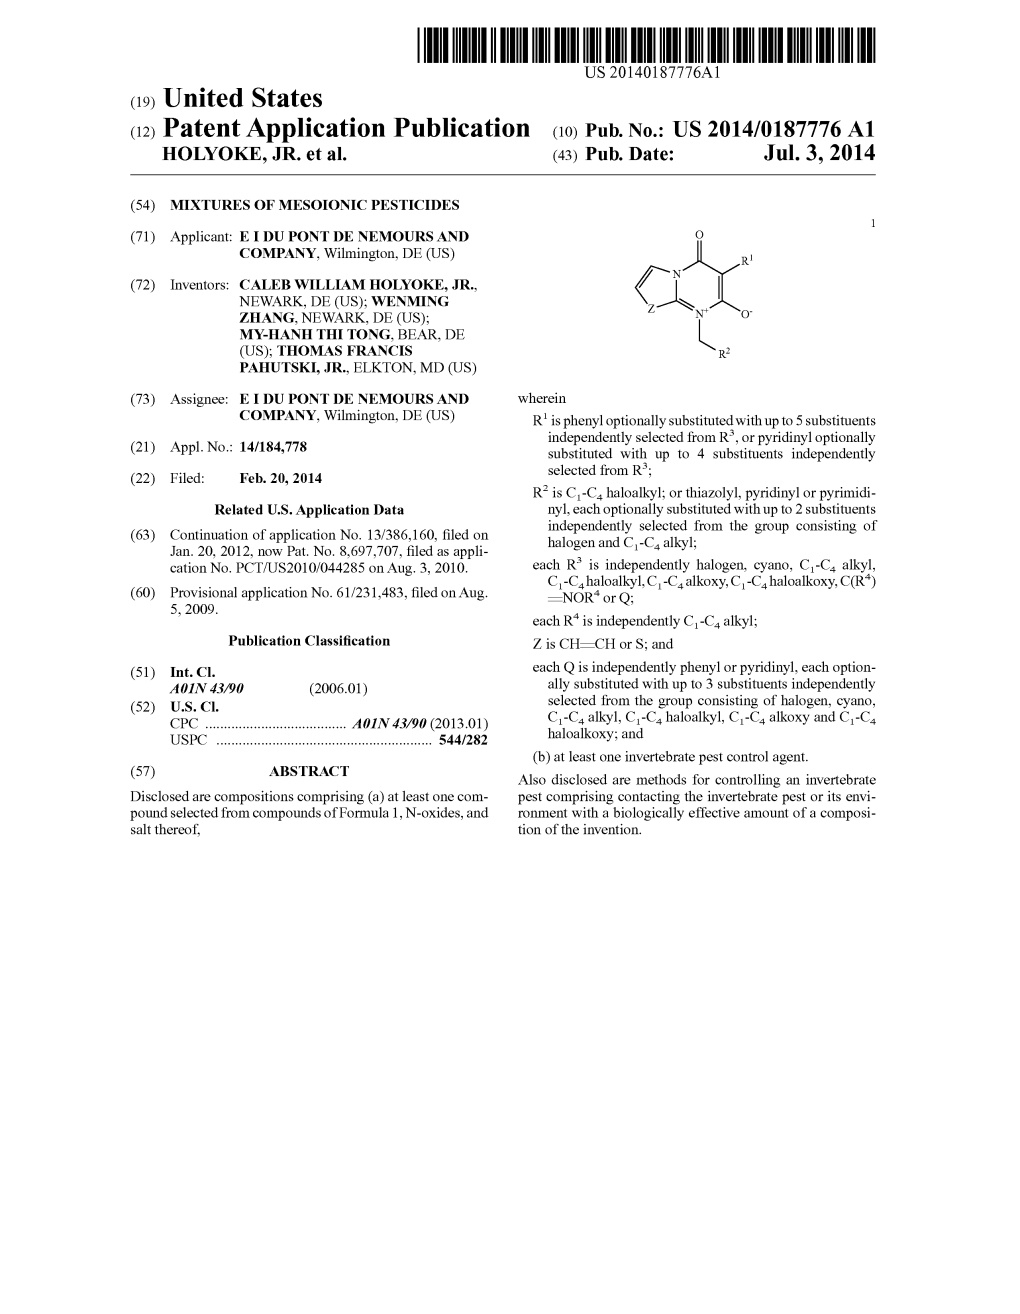 (12) Patent Application Publication (10) Pub. No.: US 2014/0187776 A1 HOLYOKE, JR